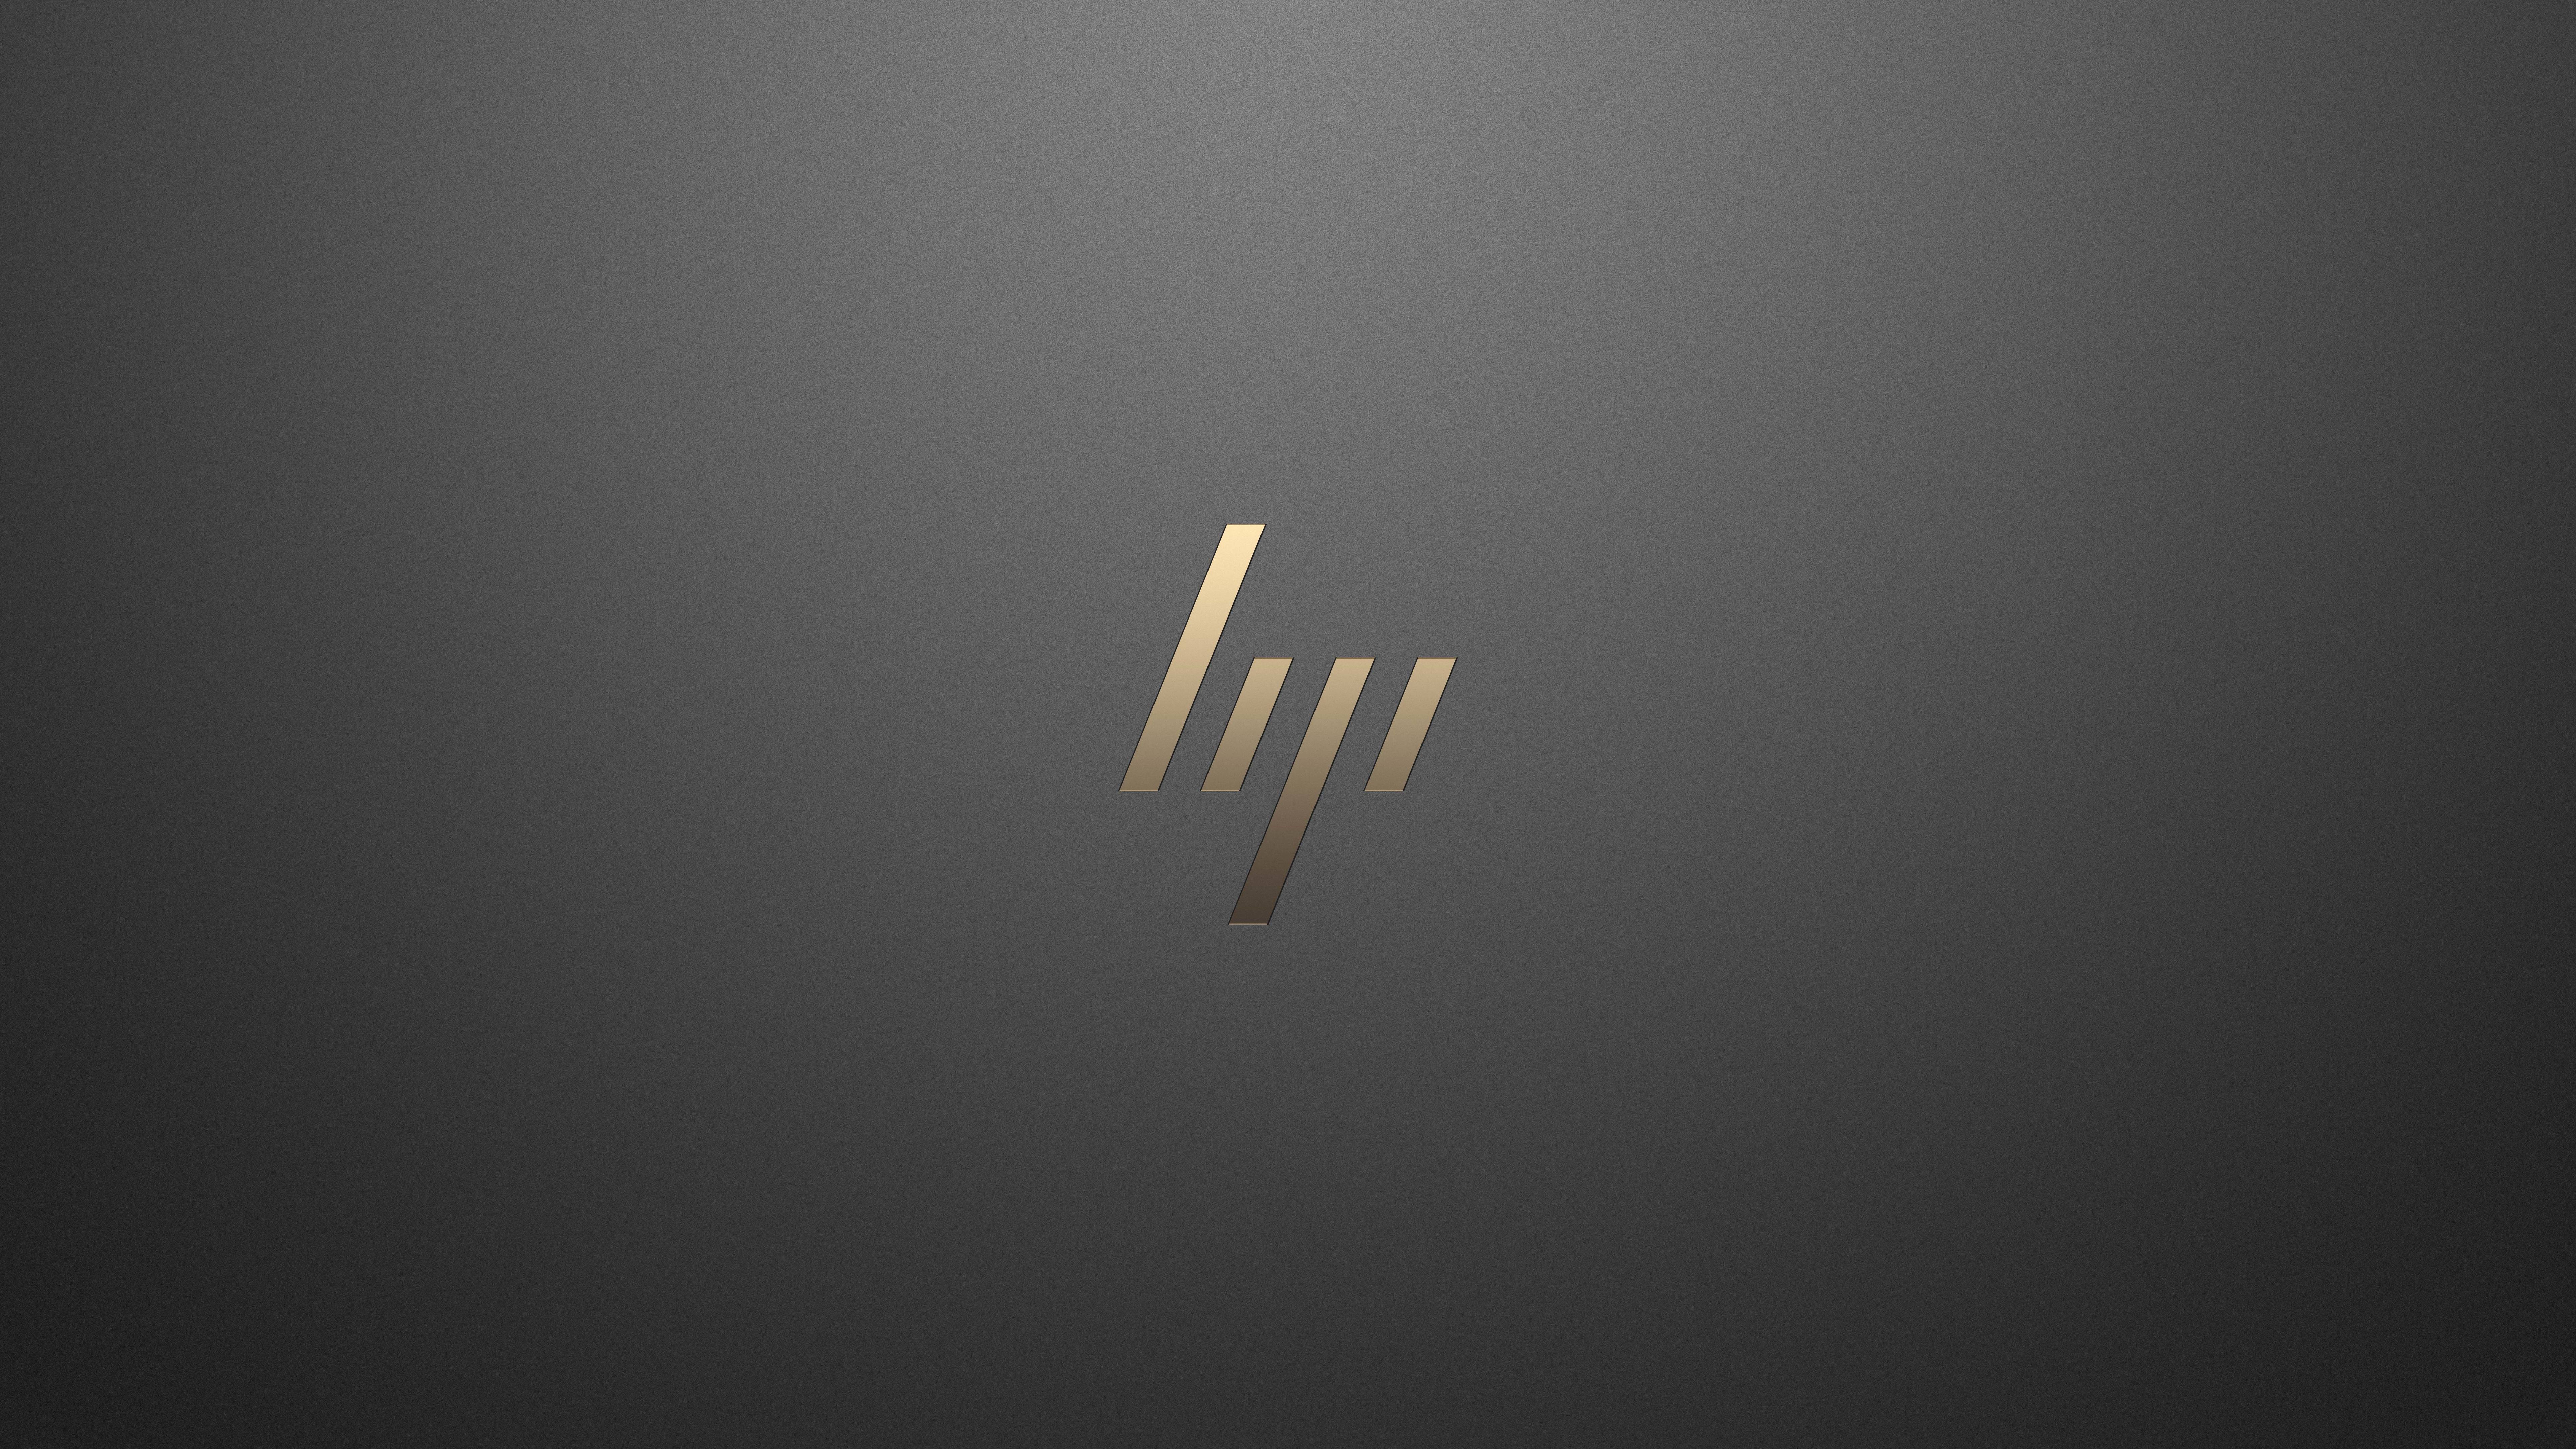 HP ENVY Logo - Hp Spectre Logo 8k 8k HD 4k Wallpaper, Image